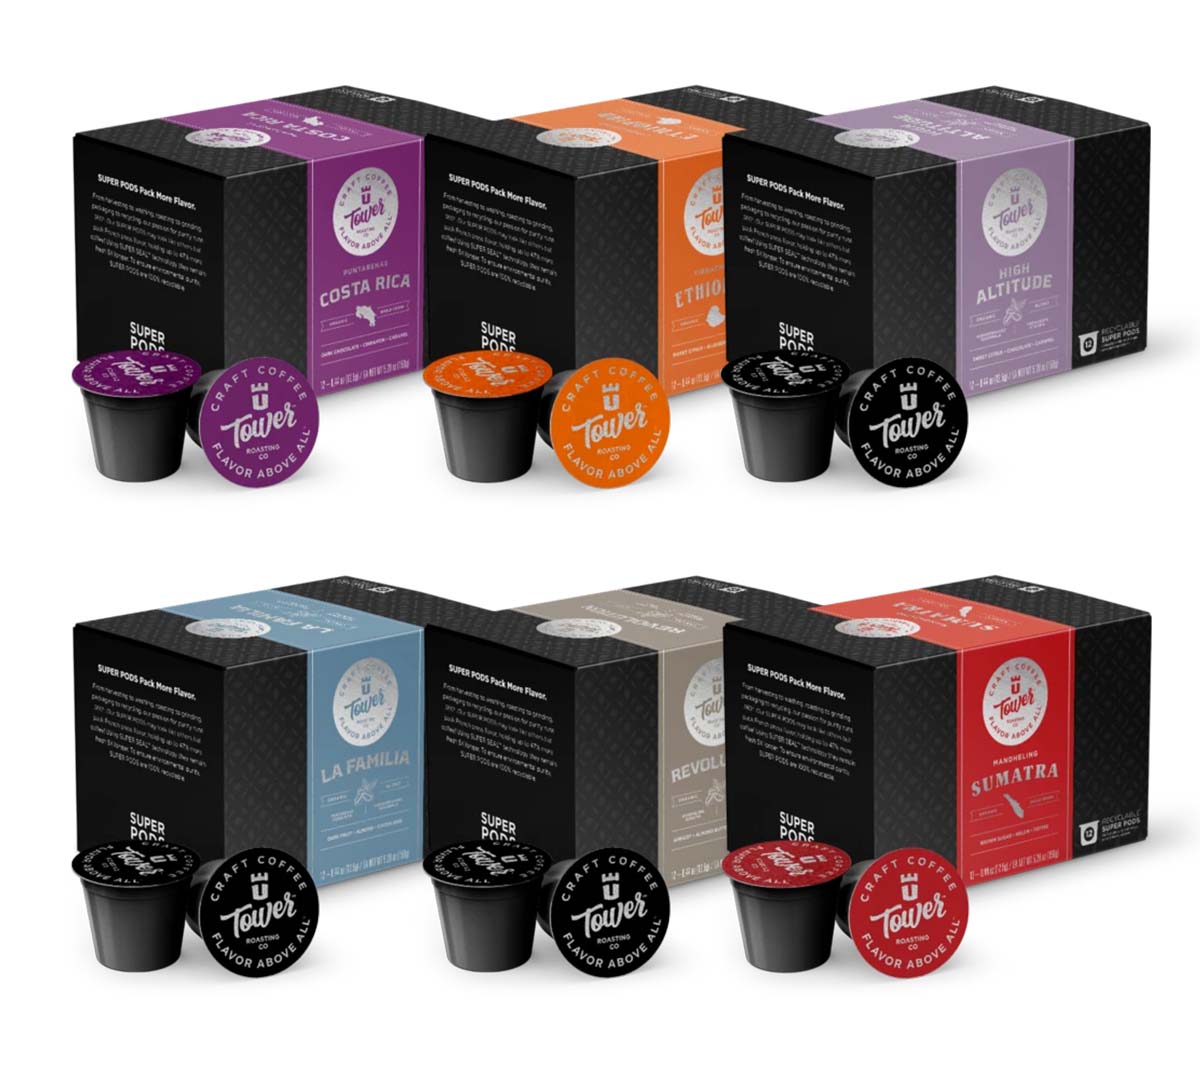 Consumer Packaged Goods - 5 Super Pod Box Designs